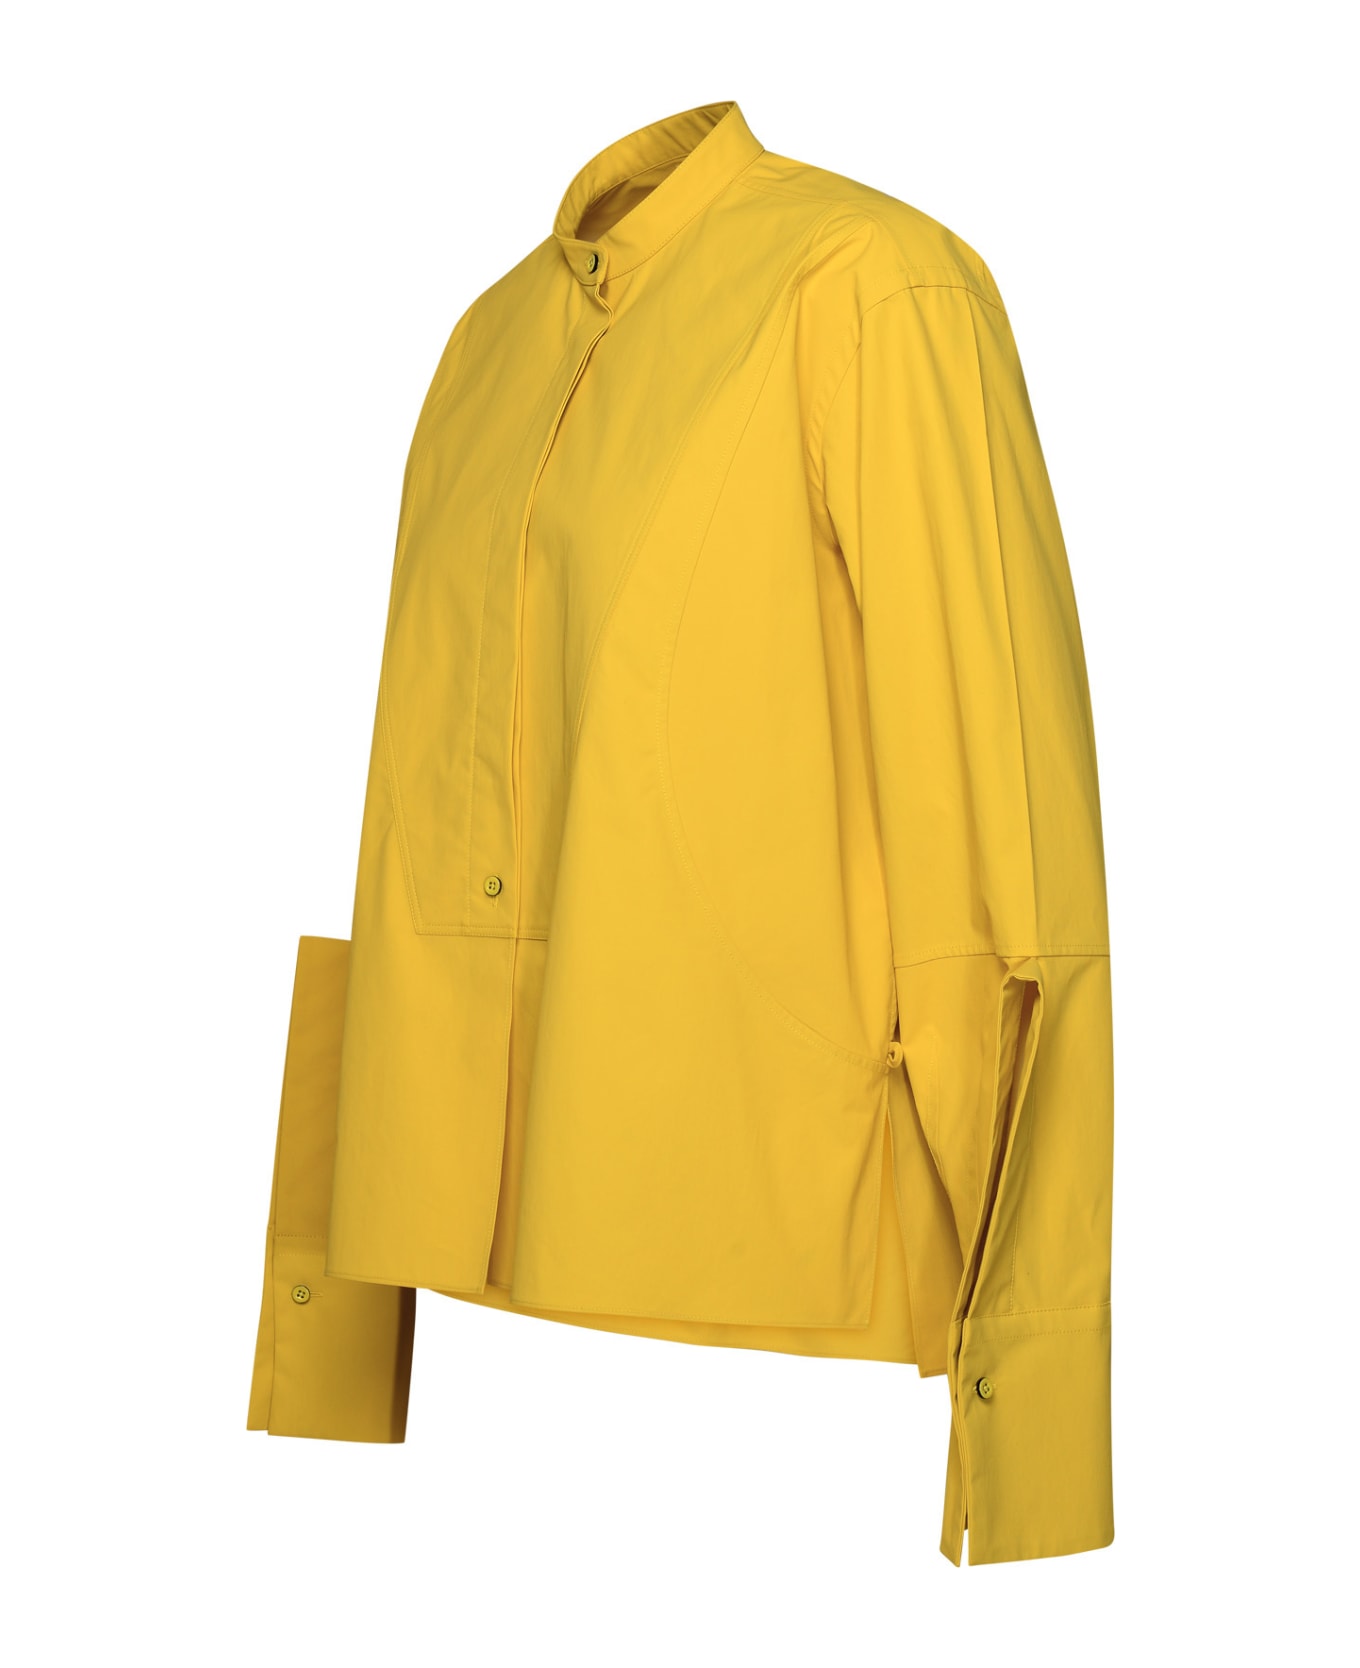 Jil Sander Mustard Cotton Shirt - Yellow トップス